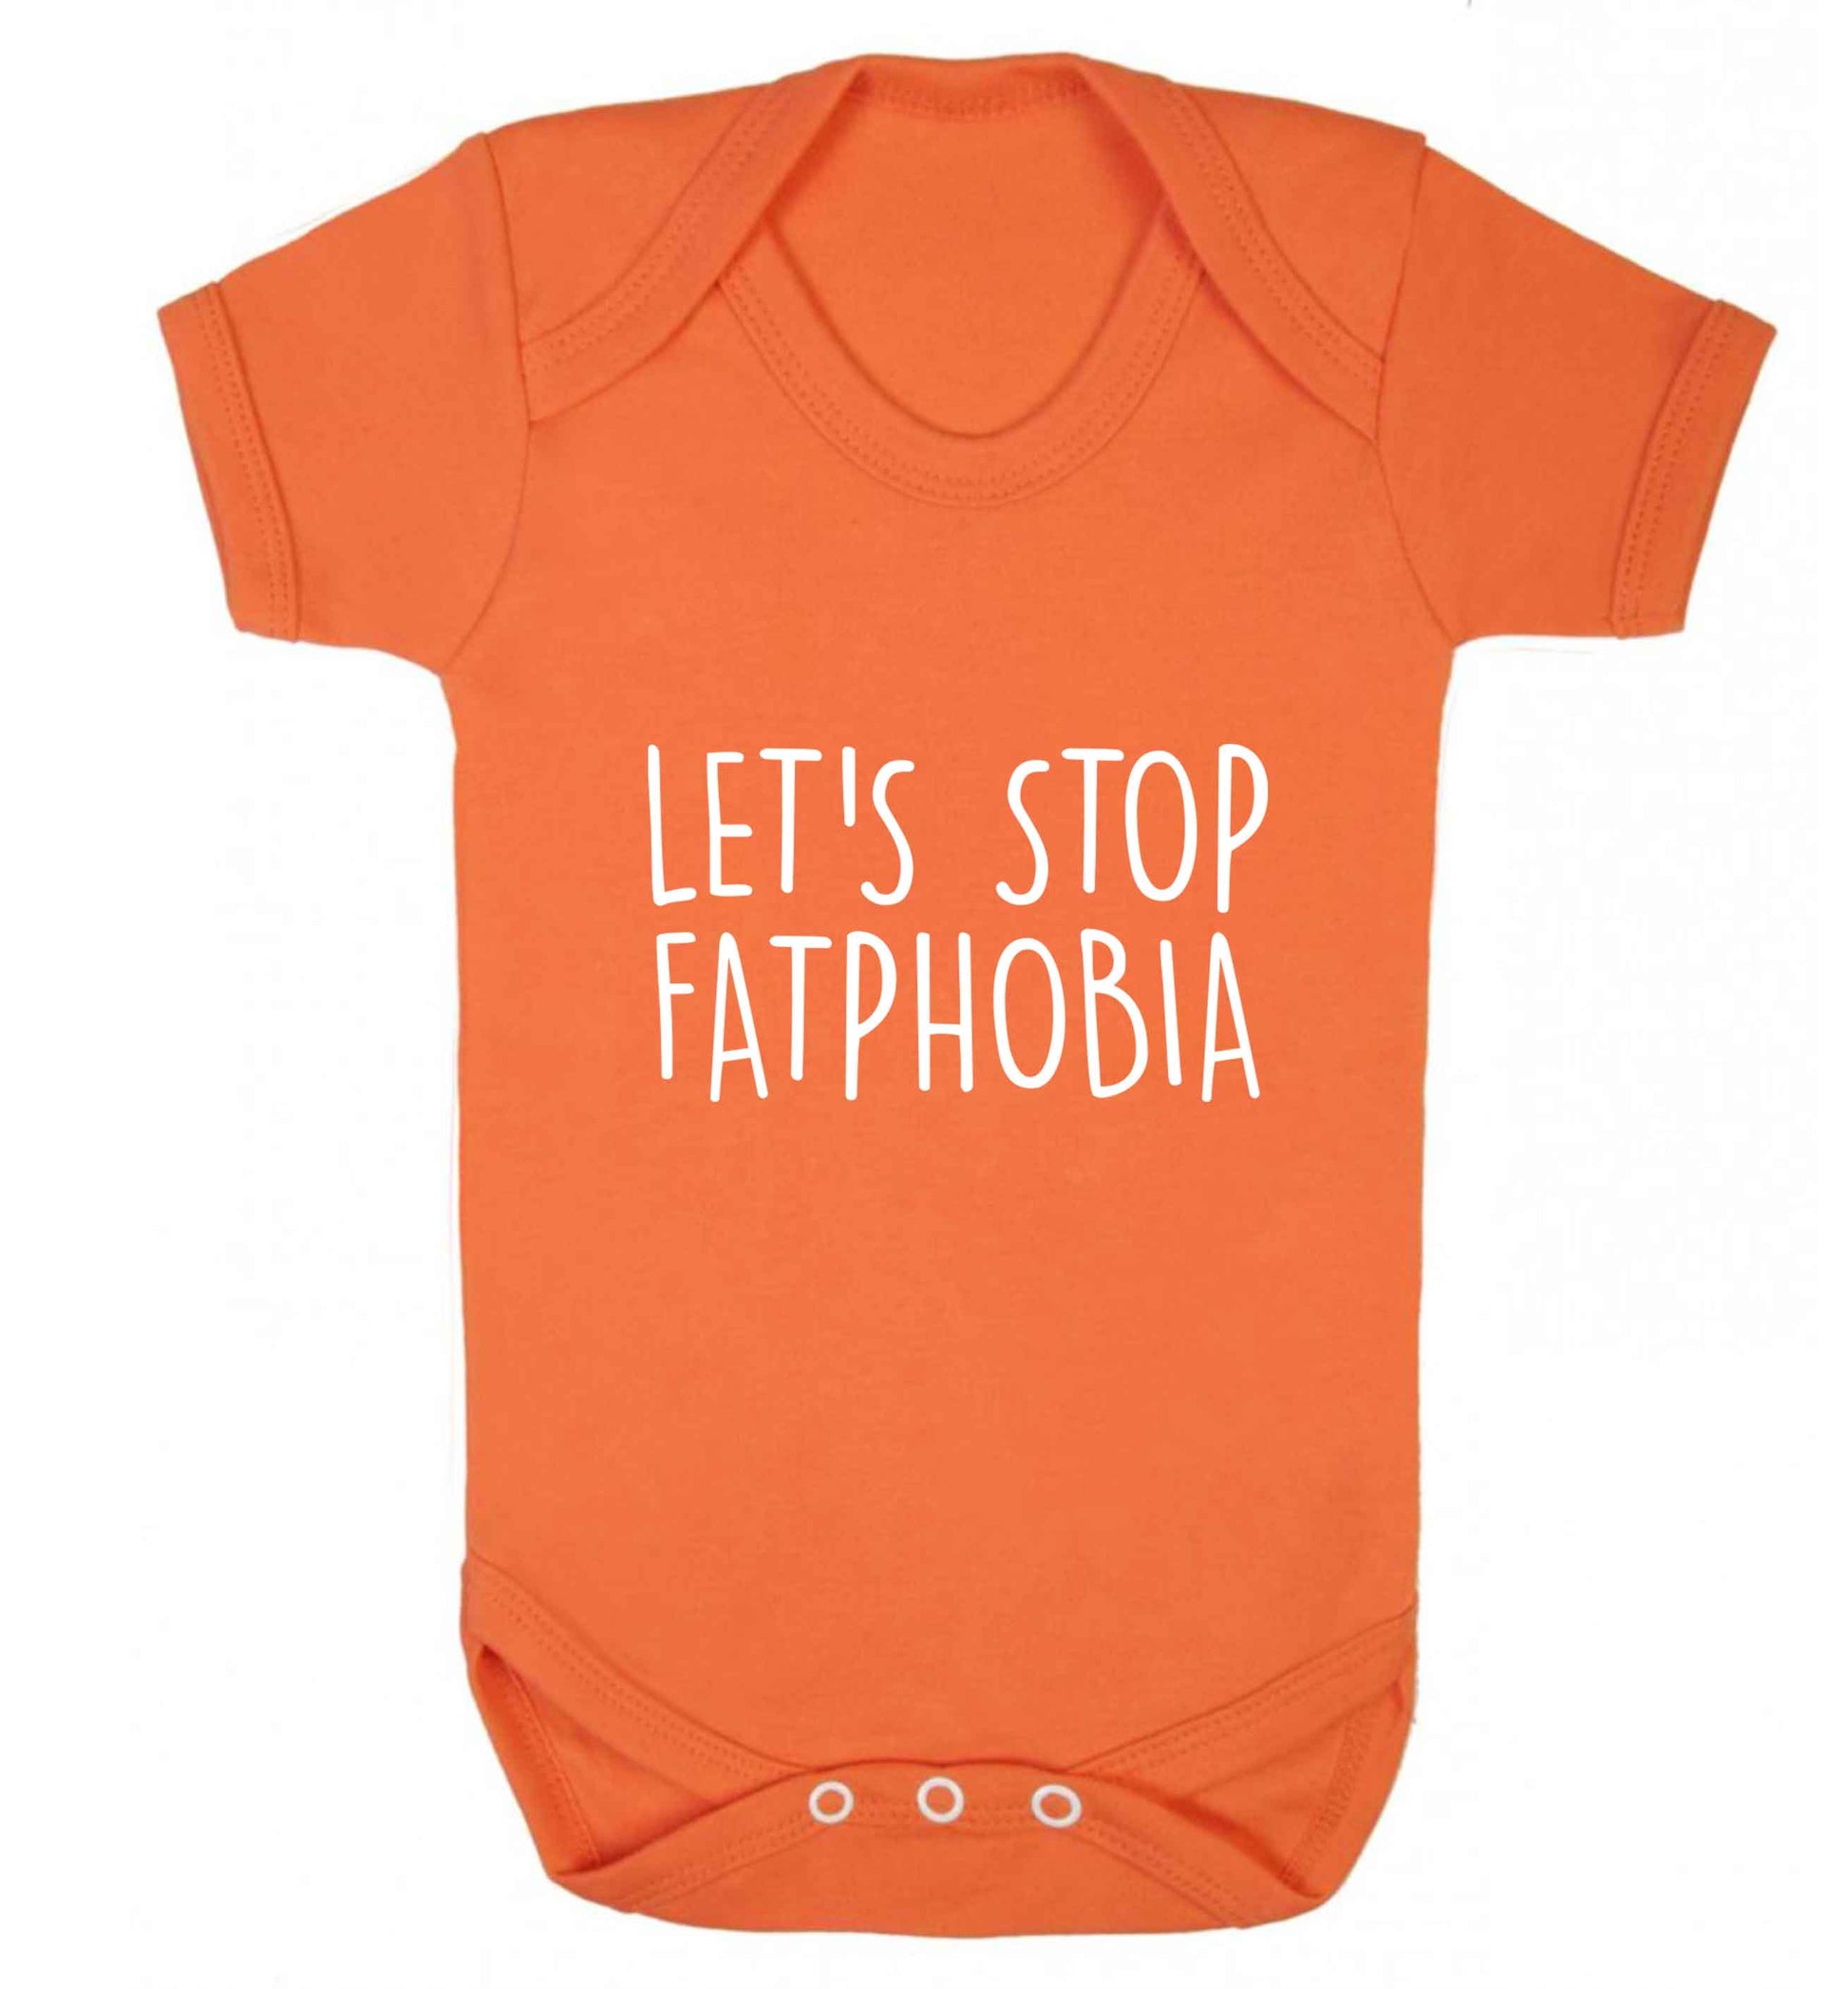 Let's stop fatphobia baby vest orange 18-24 months